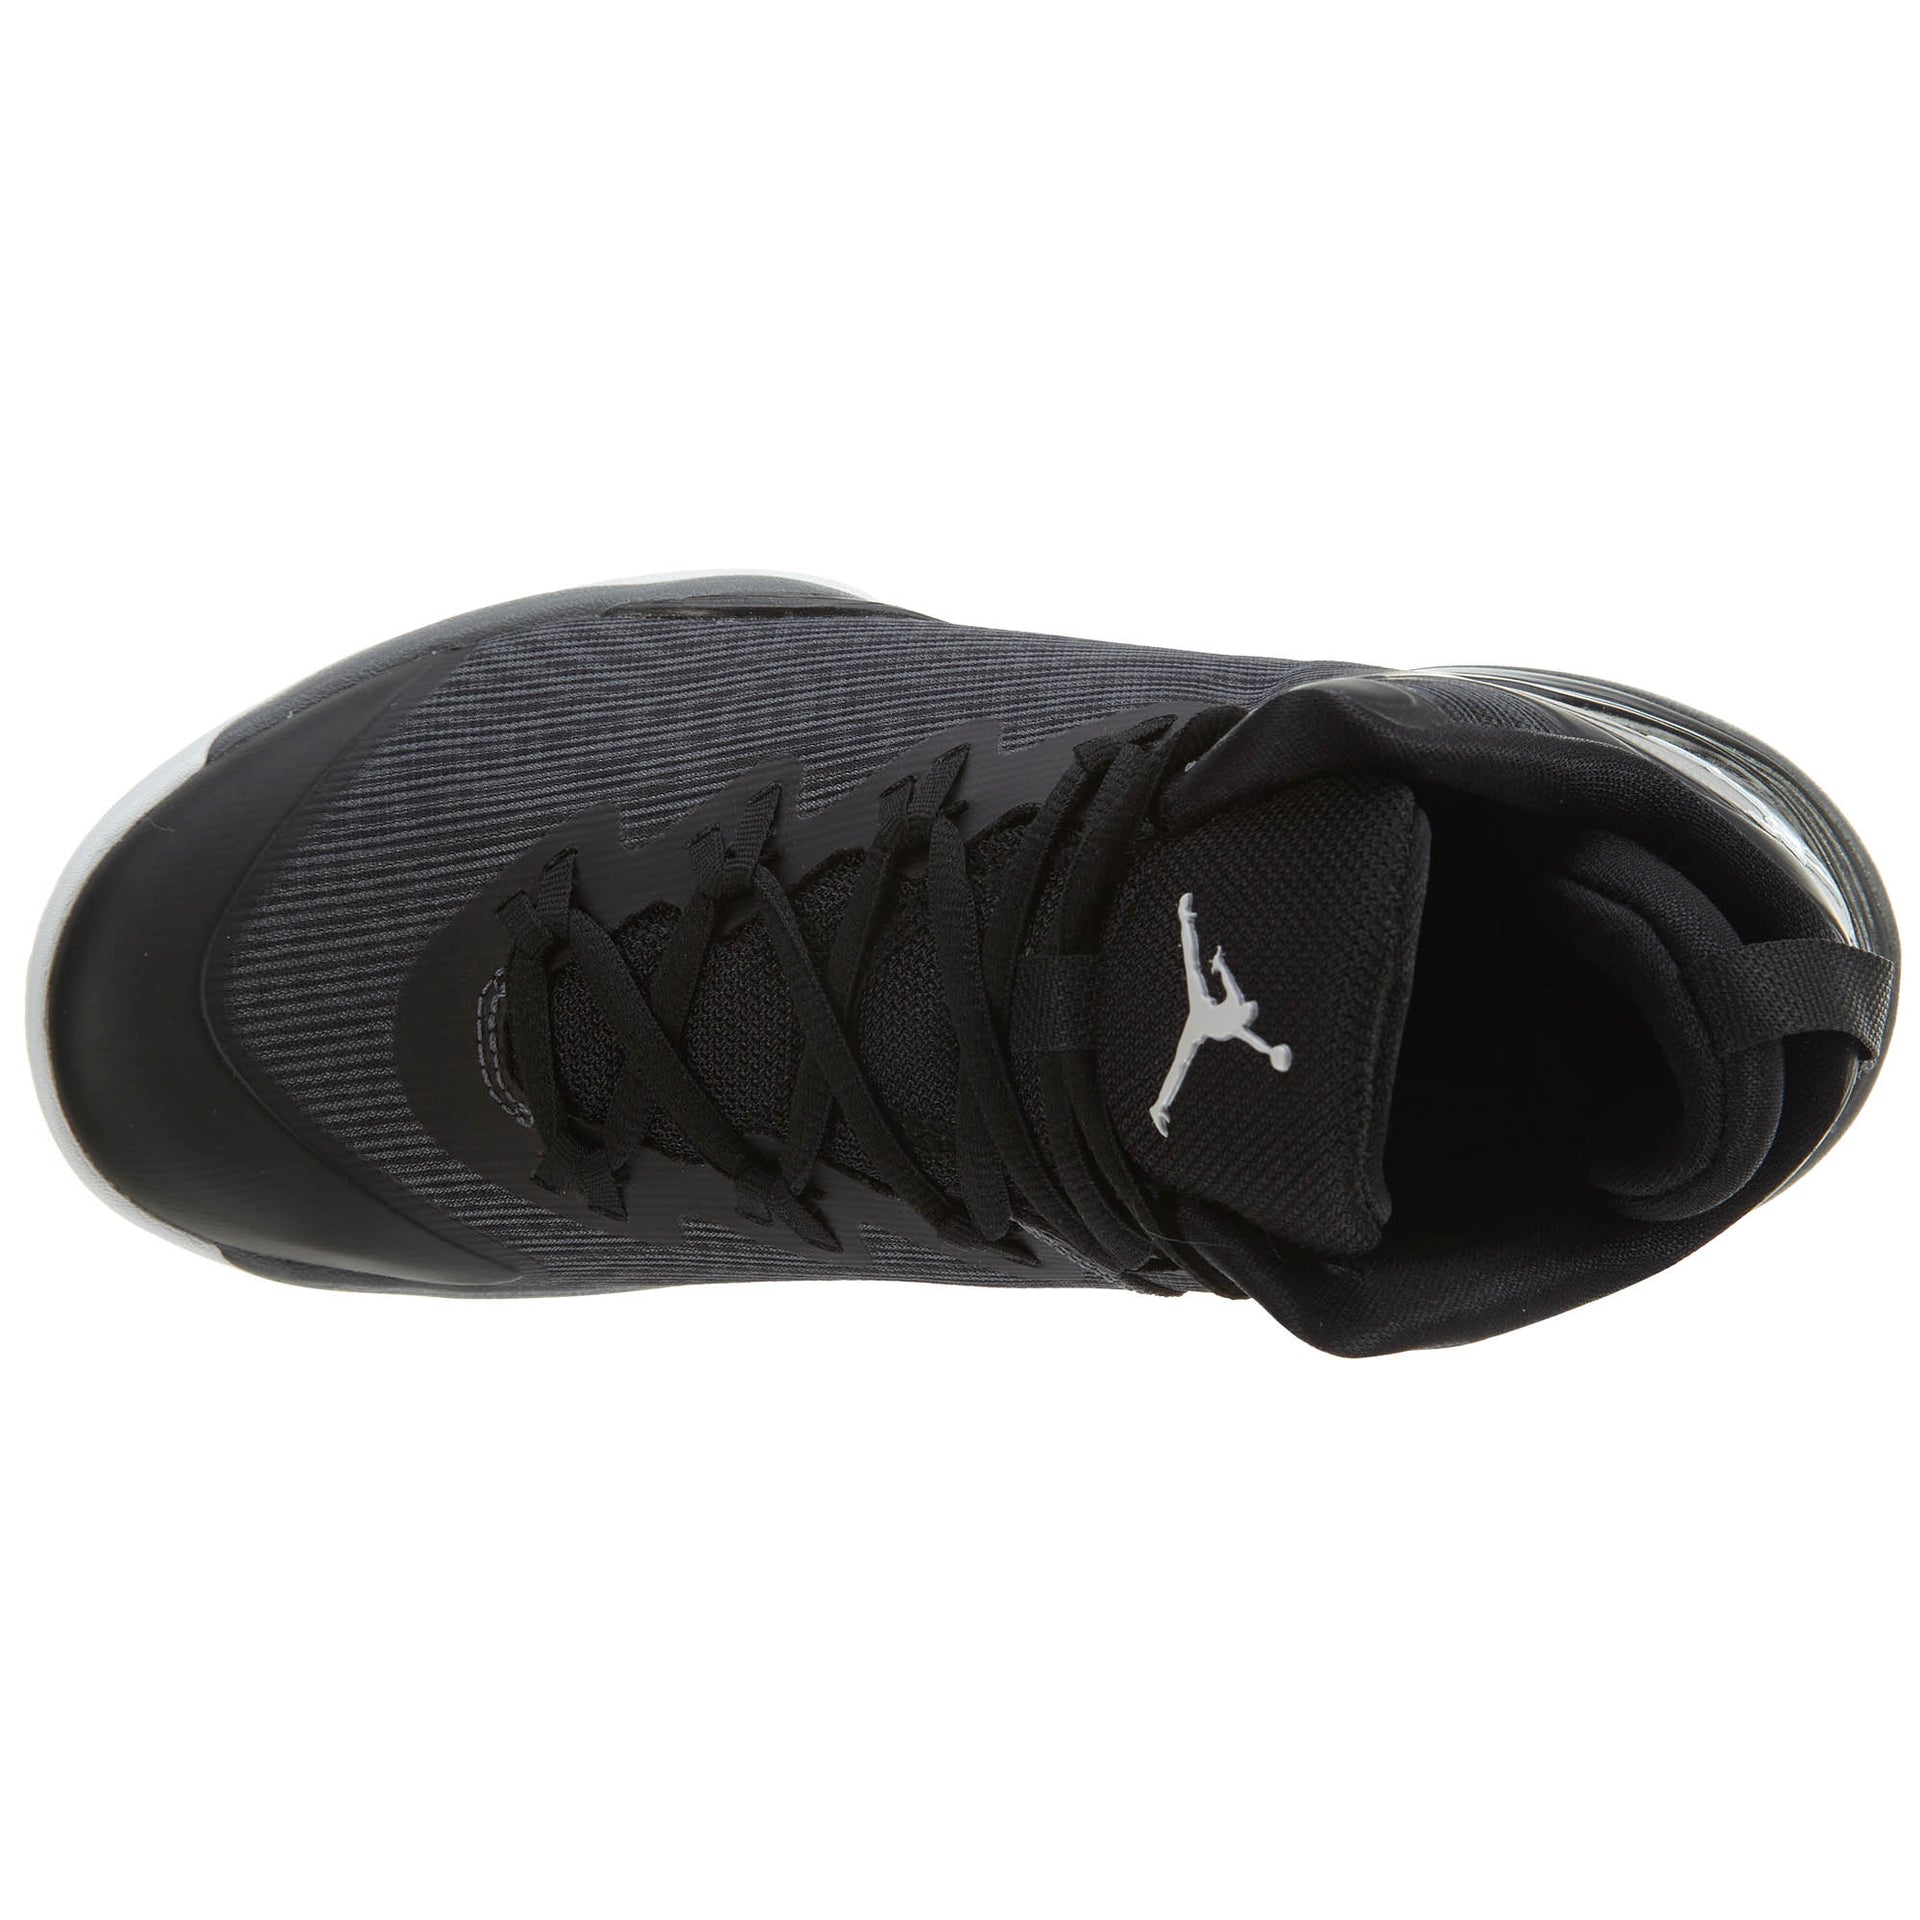 Nike Jordan Super Fly 3 Black Grey Youths Trainers  Boys / Girls Style :684936